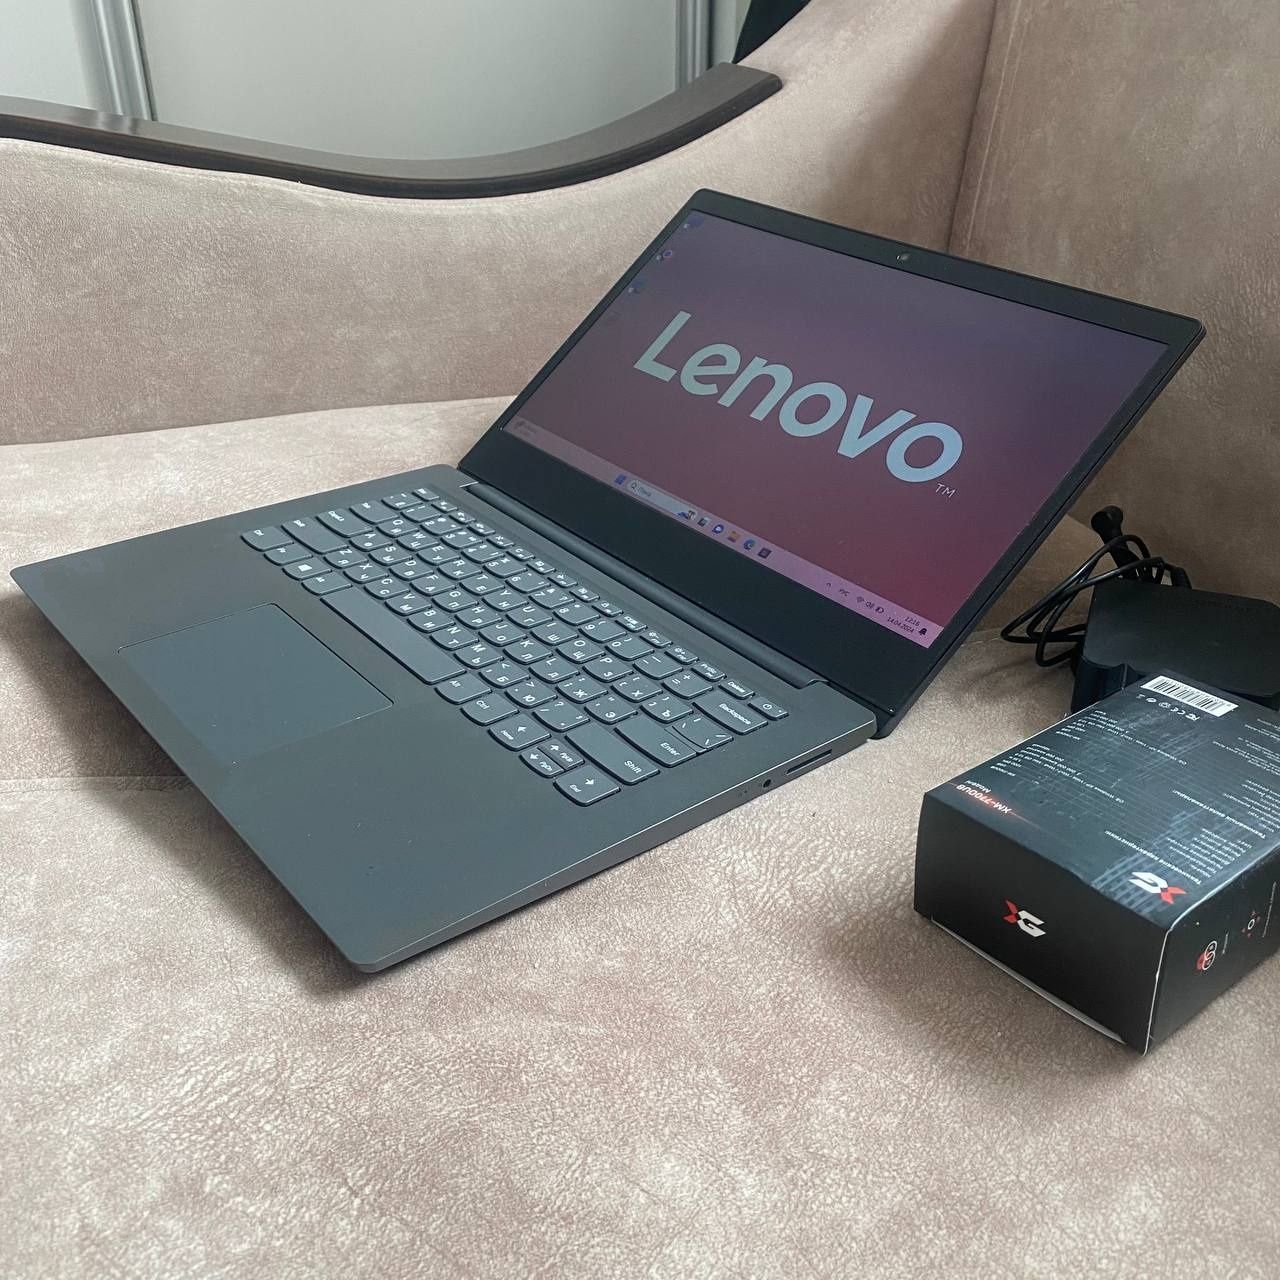 Мощный Lenovo 2023г/HDD-1000GB/ОЗУ-4ГБ/Windows 10